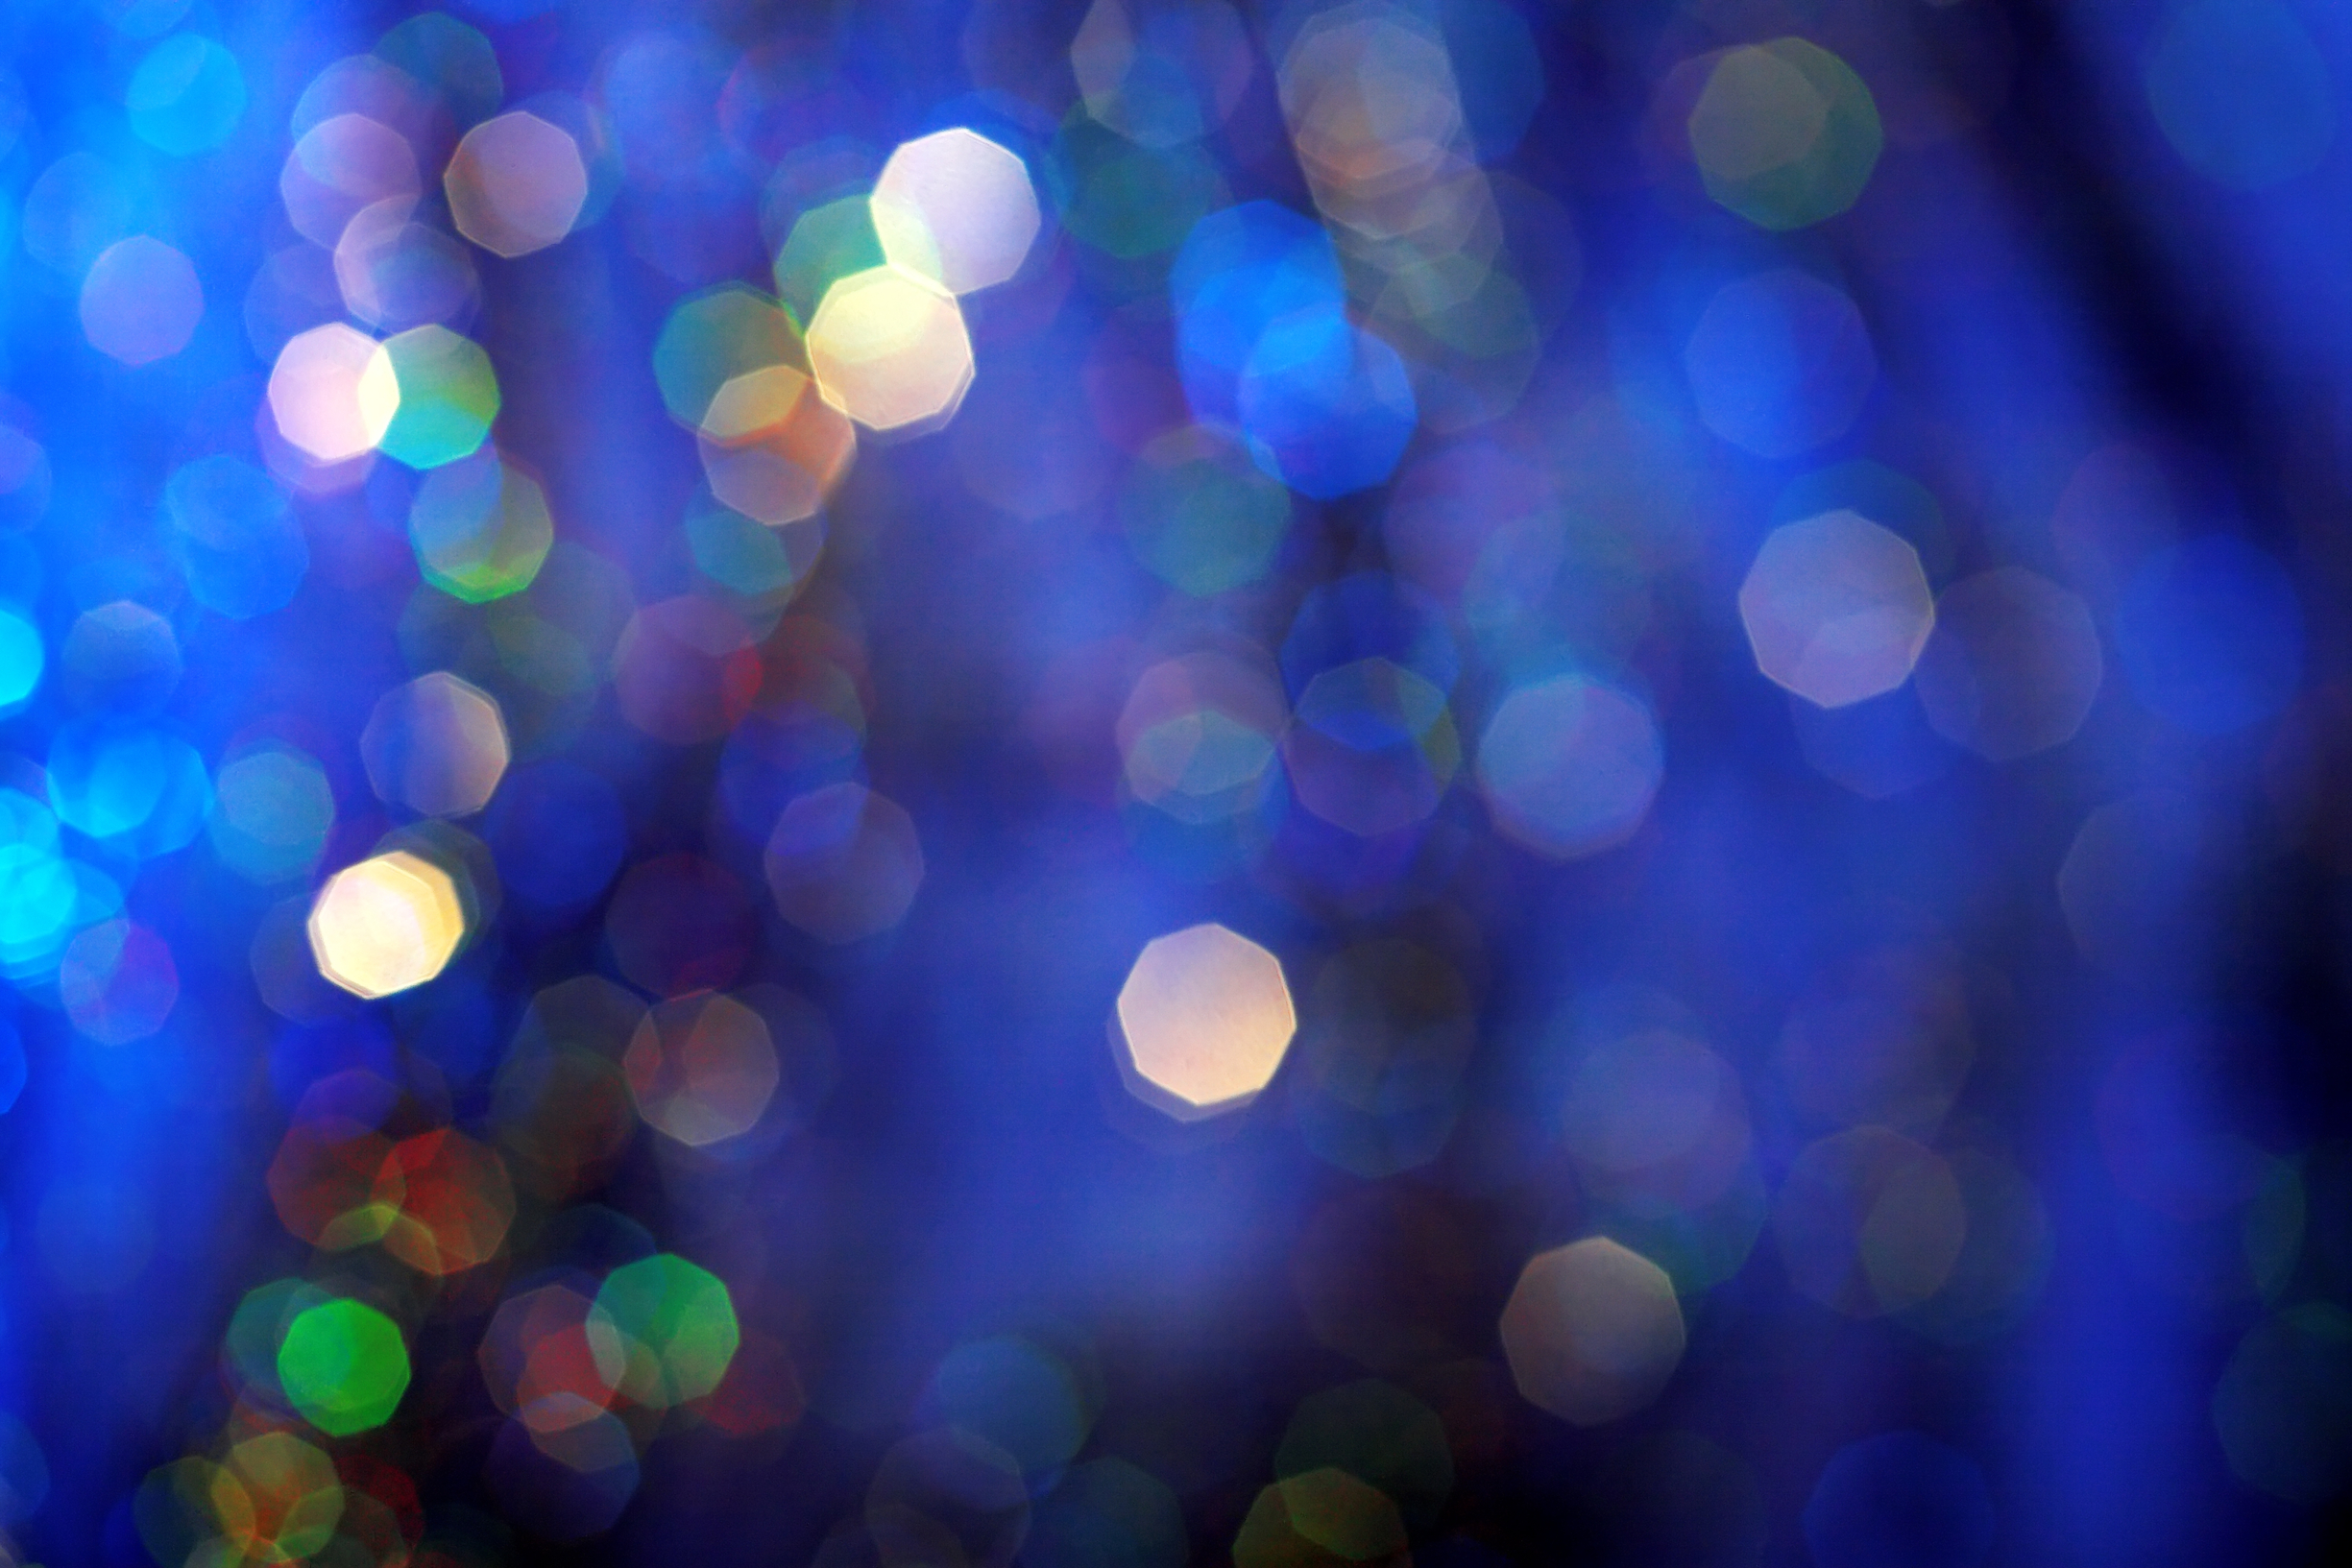 Free Christmas light background from Depositphotoscom